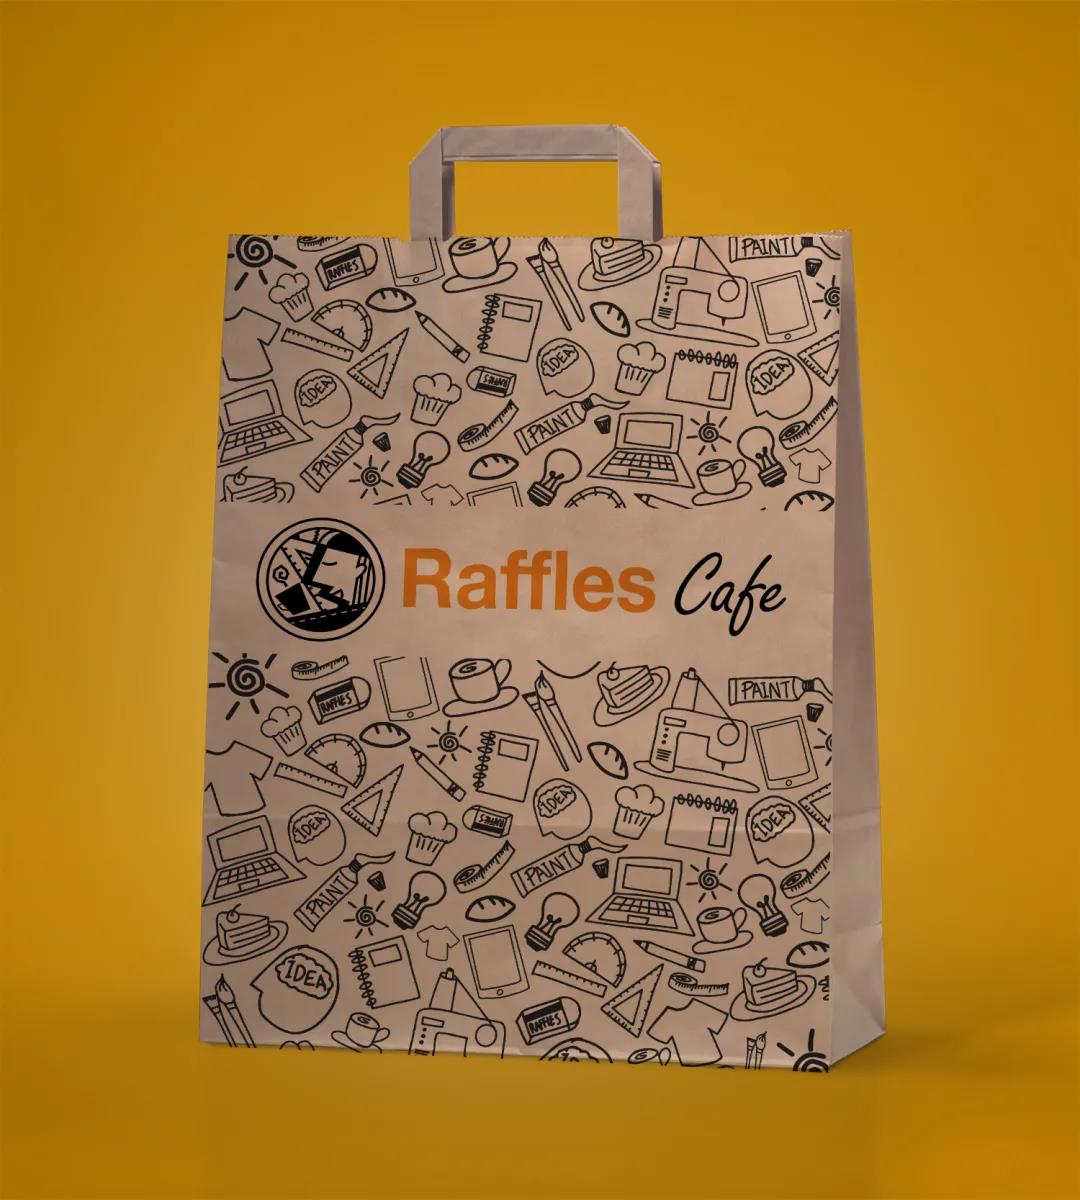 Raffles Cafe